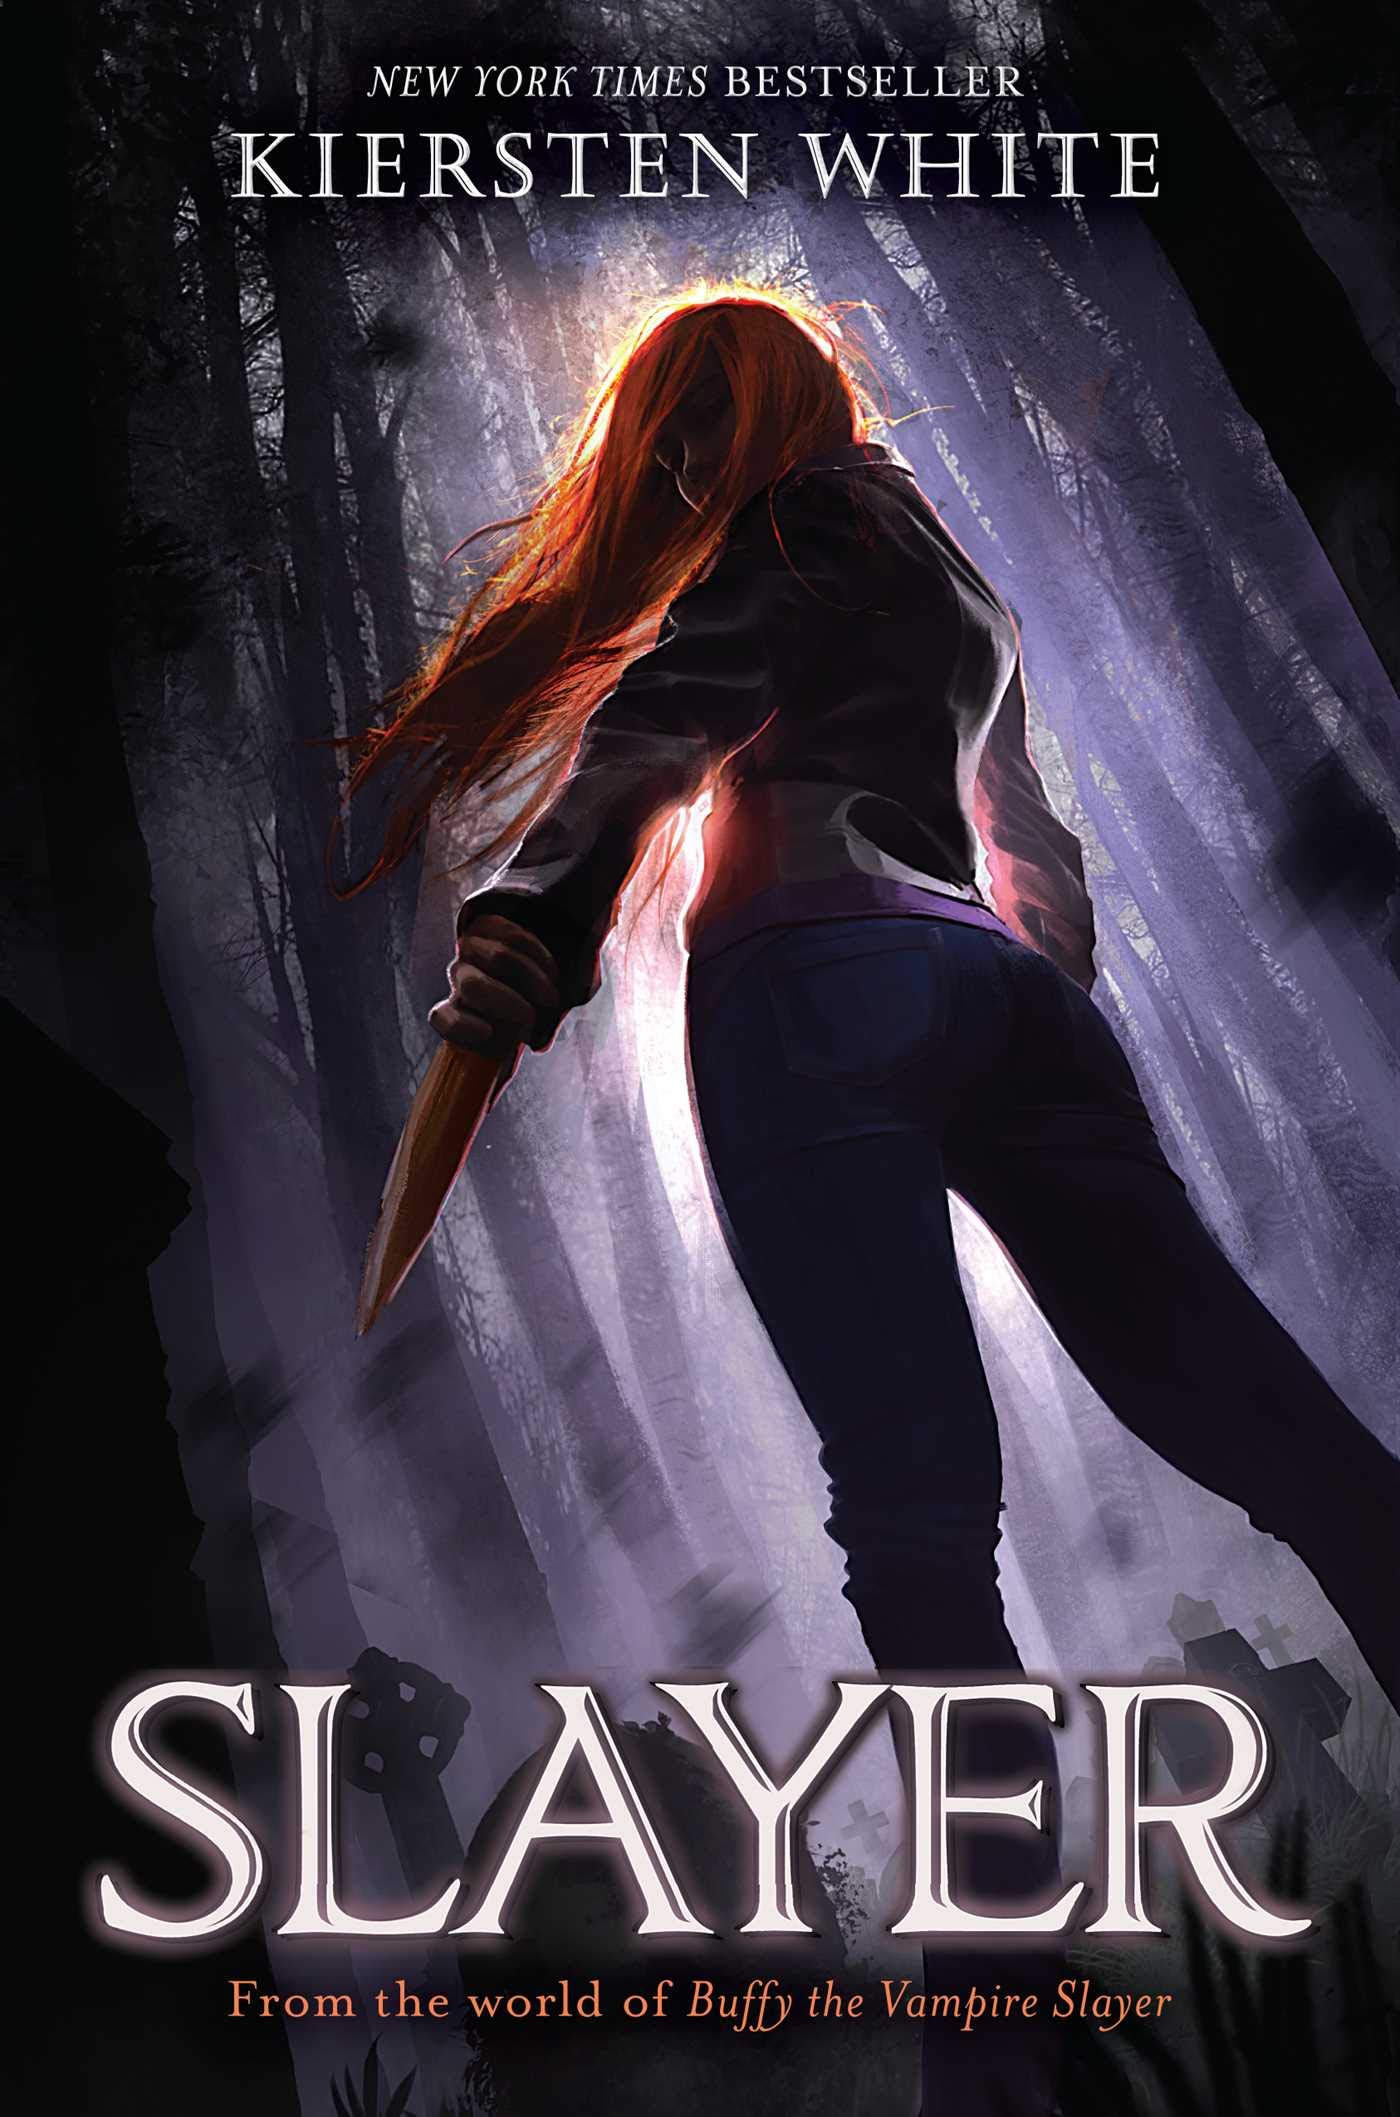 Image for "Slayer"